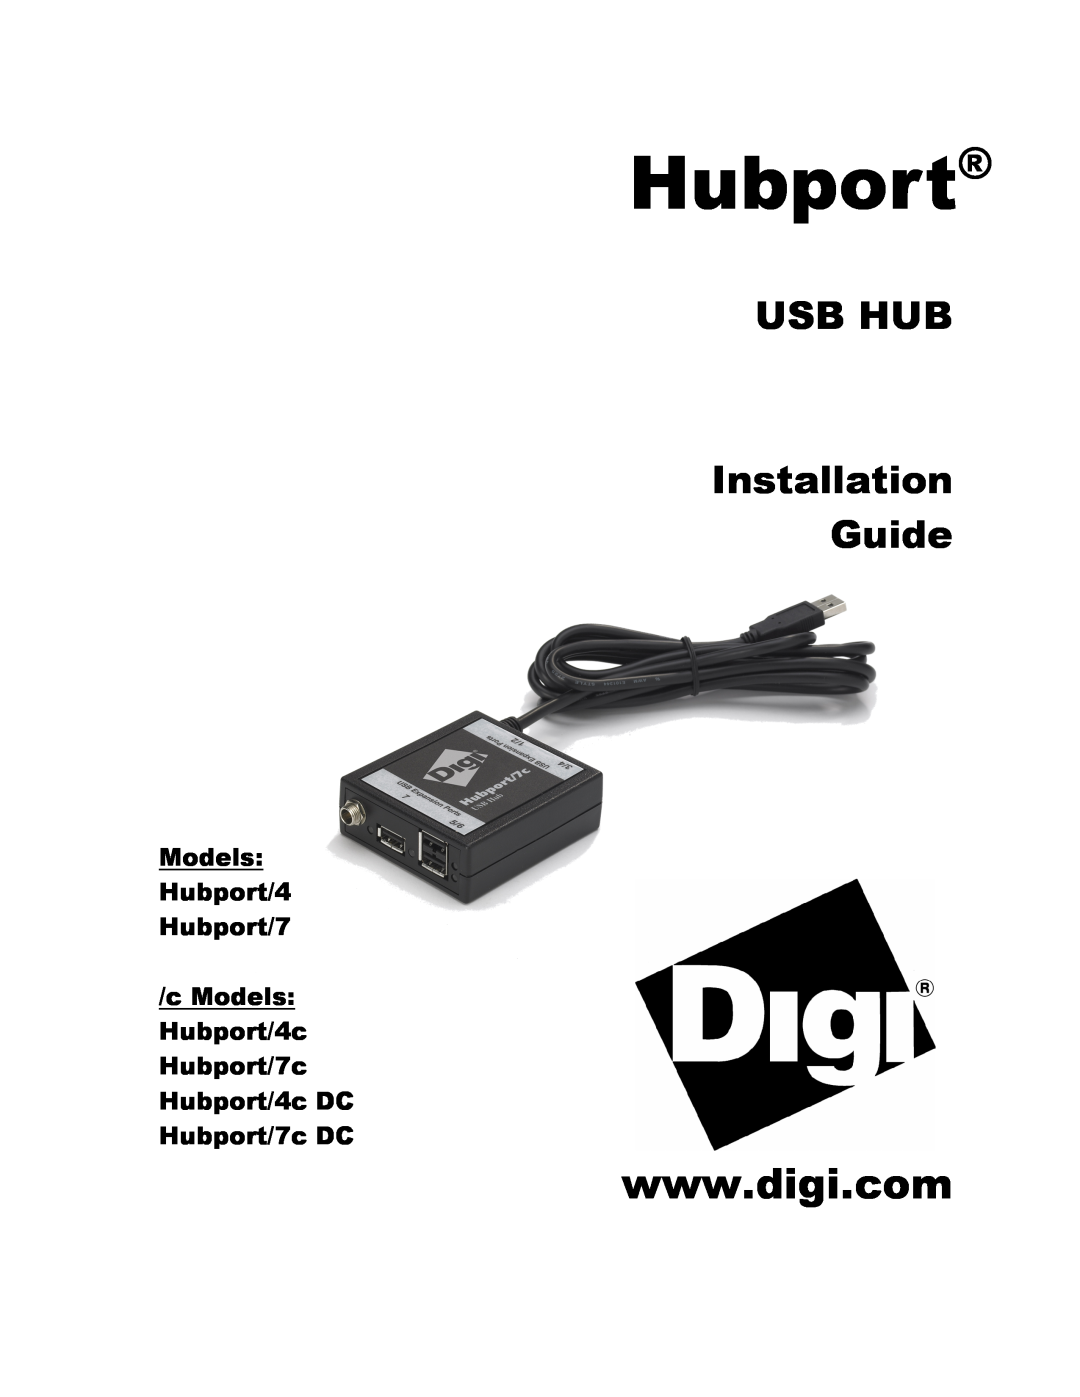 Digi Hubport/7c DC, Hubport/4c DC manual USB HUB Installation Guide, Models Hubport/4 Hubport/7 